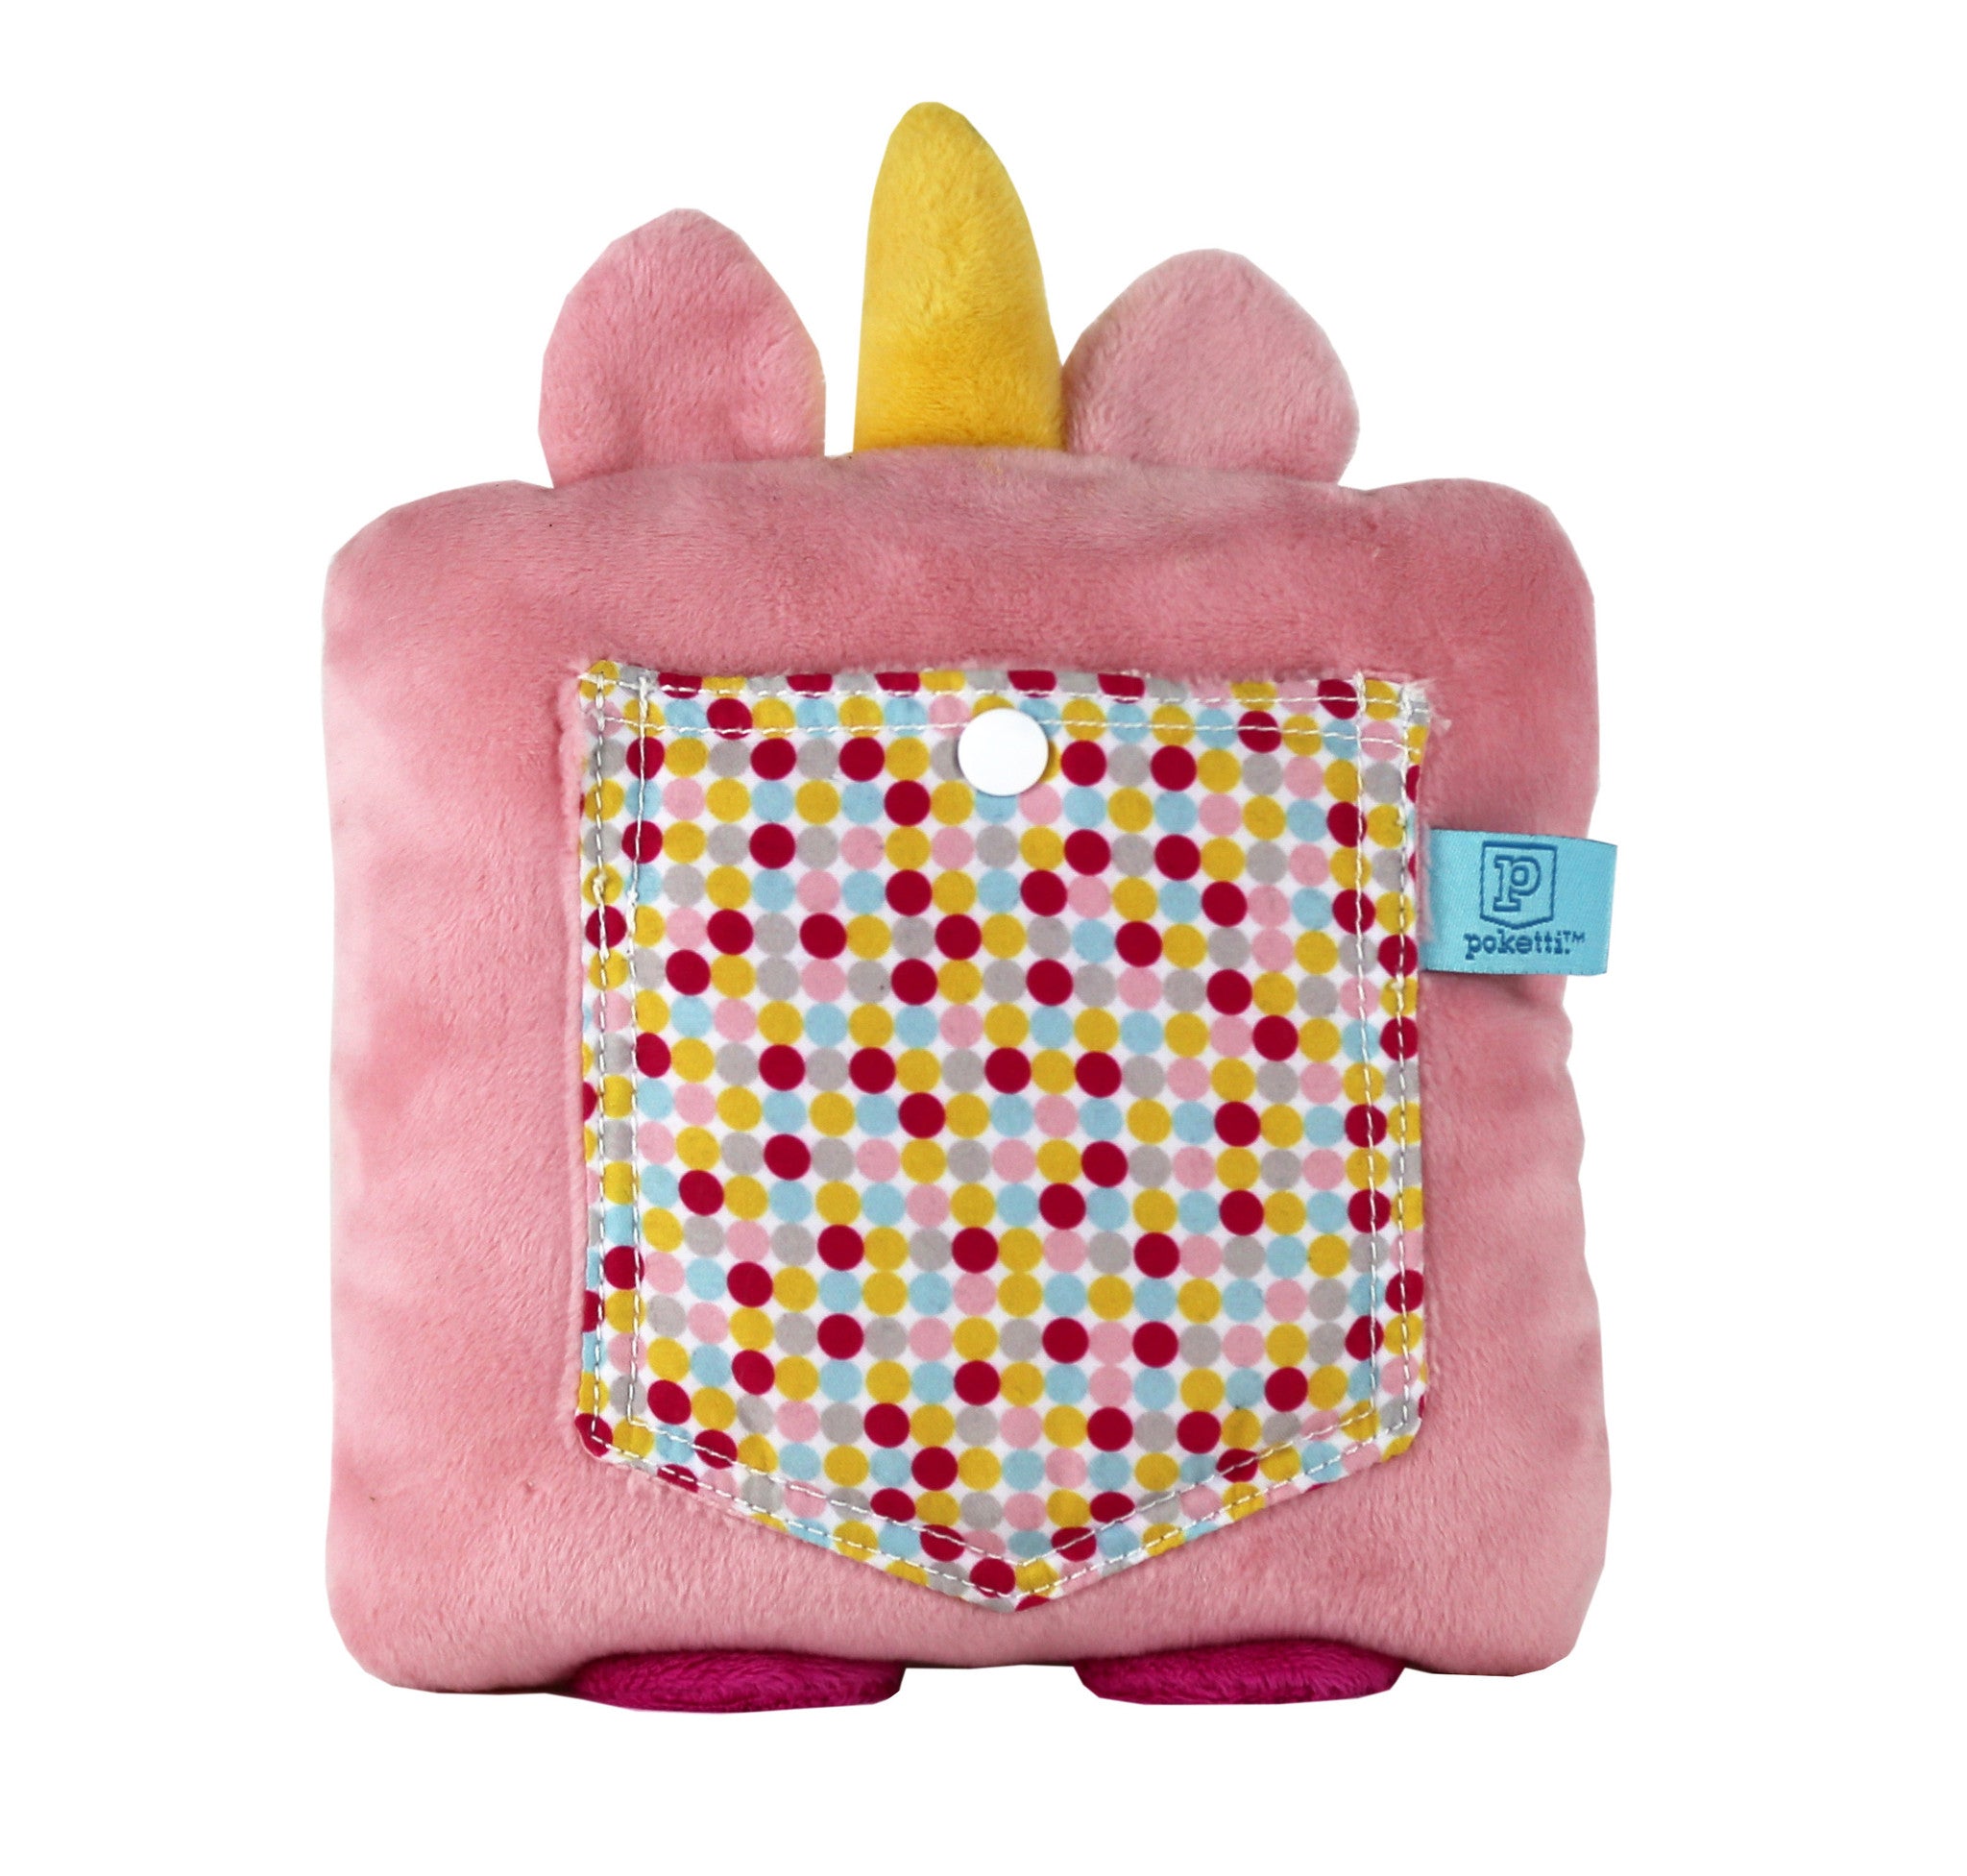 Plush toy unicorn stuffed animal with a useful back pocket